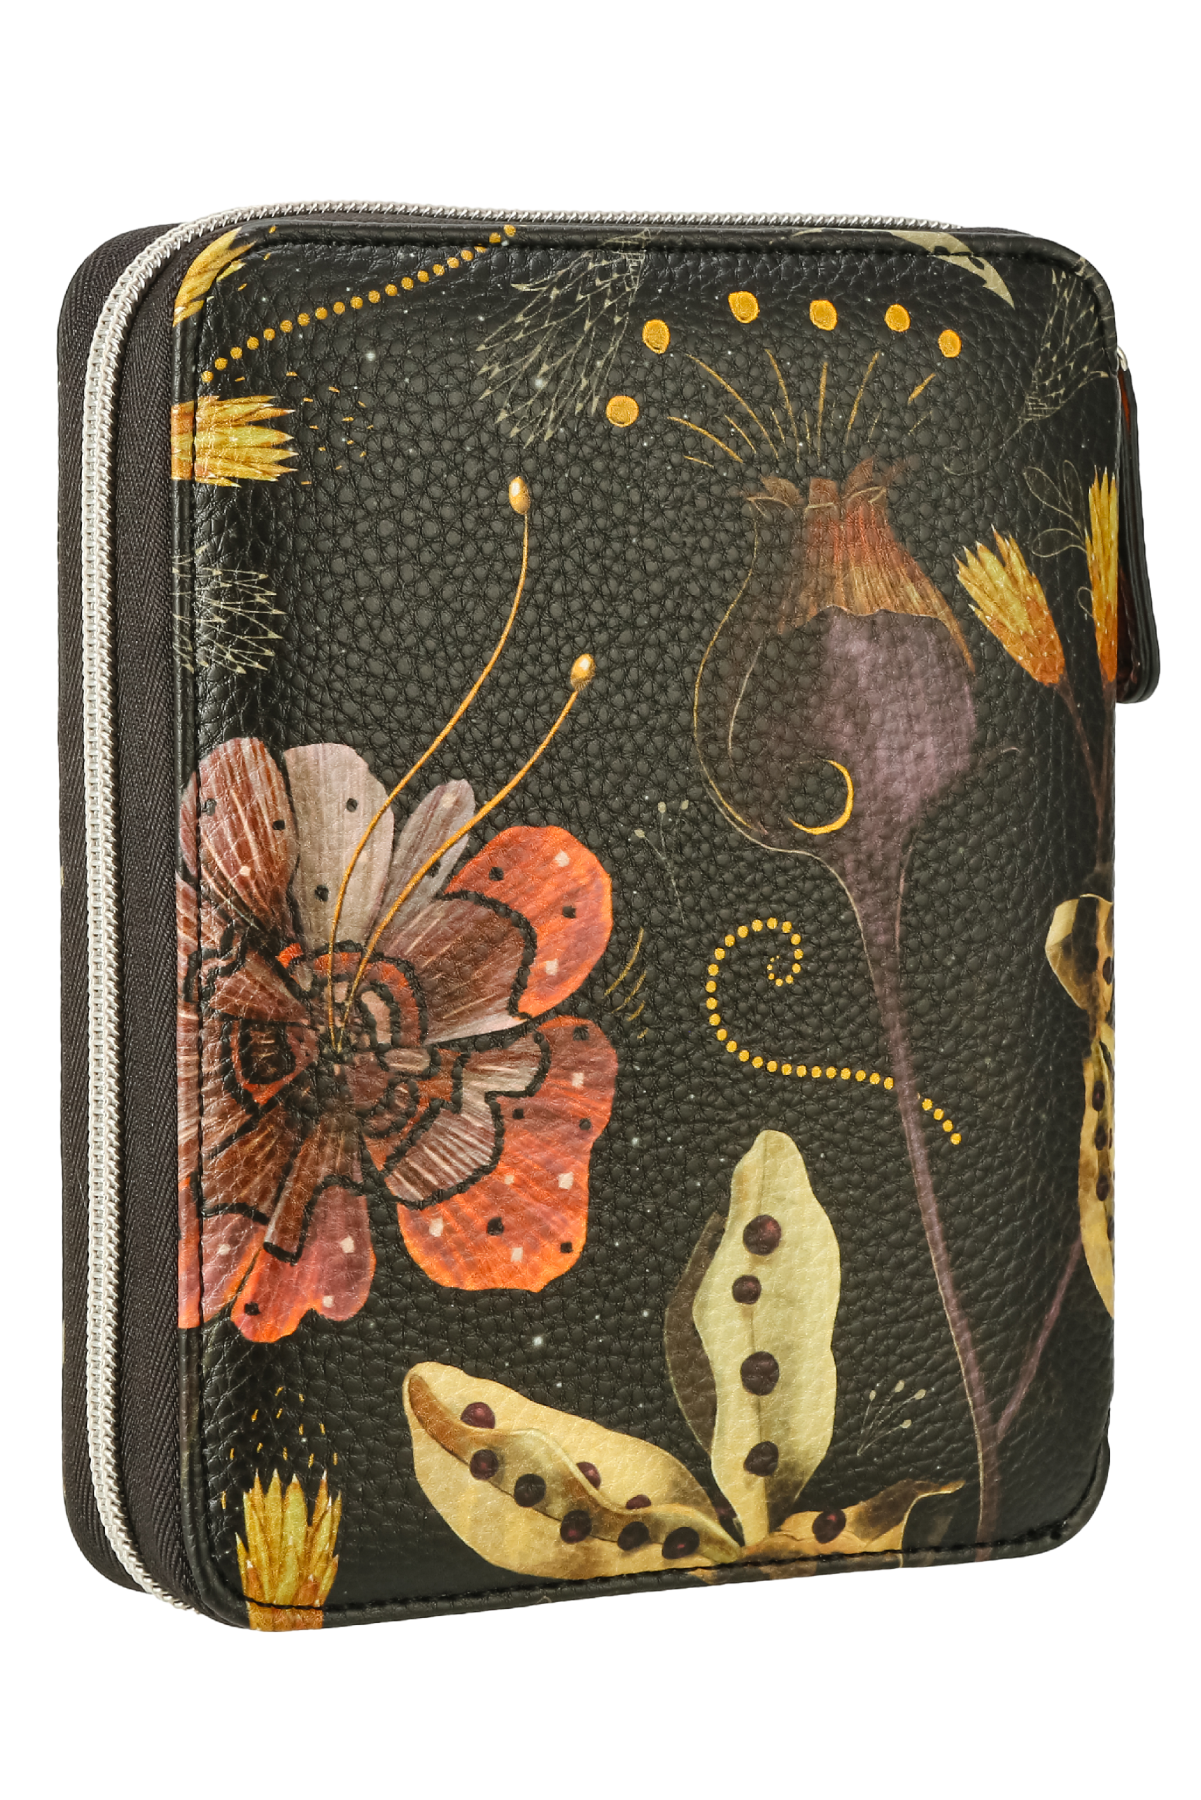 Zippered Vegan Leather Portfolio Notebook / Diary (Fall)